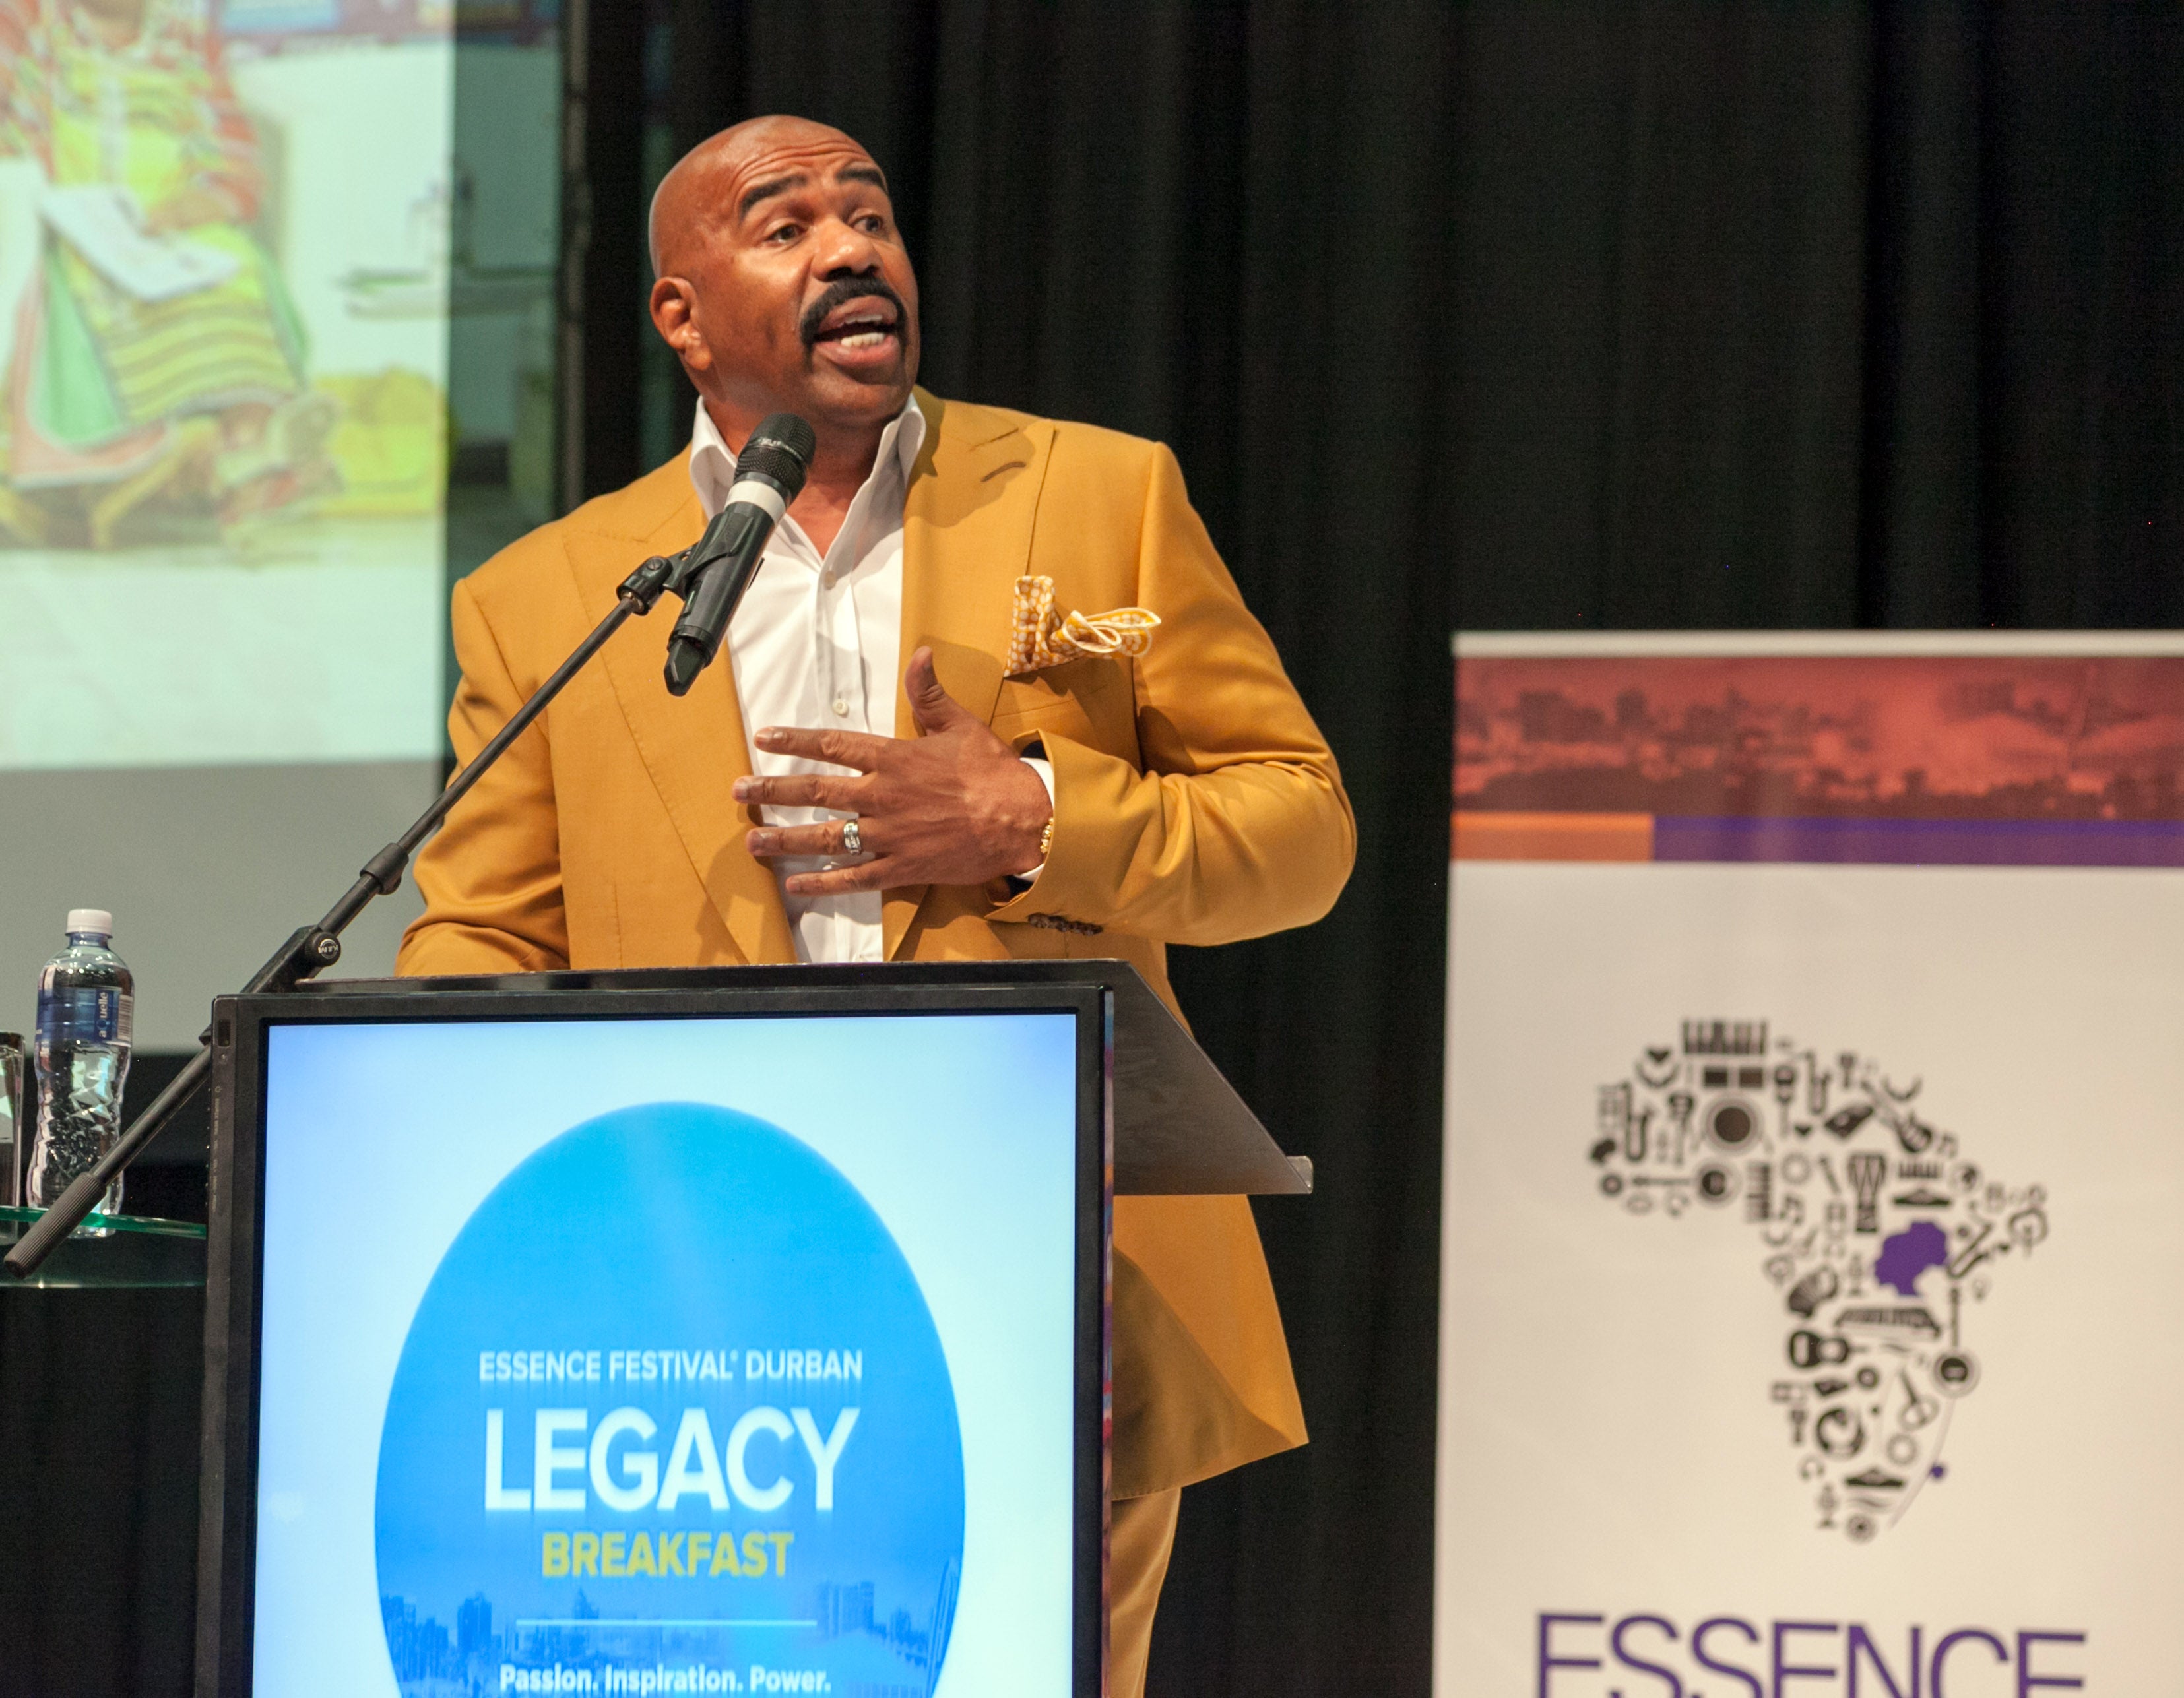 6 Major Keys Learned from Steve Harvey's Essence Festival Durban Keynote Address
